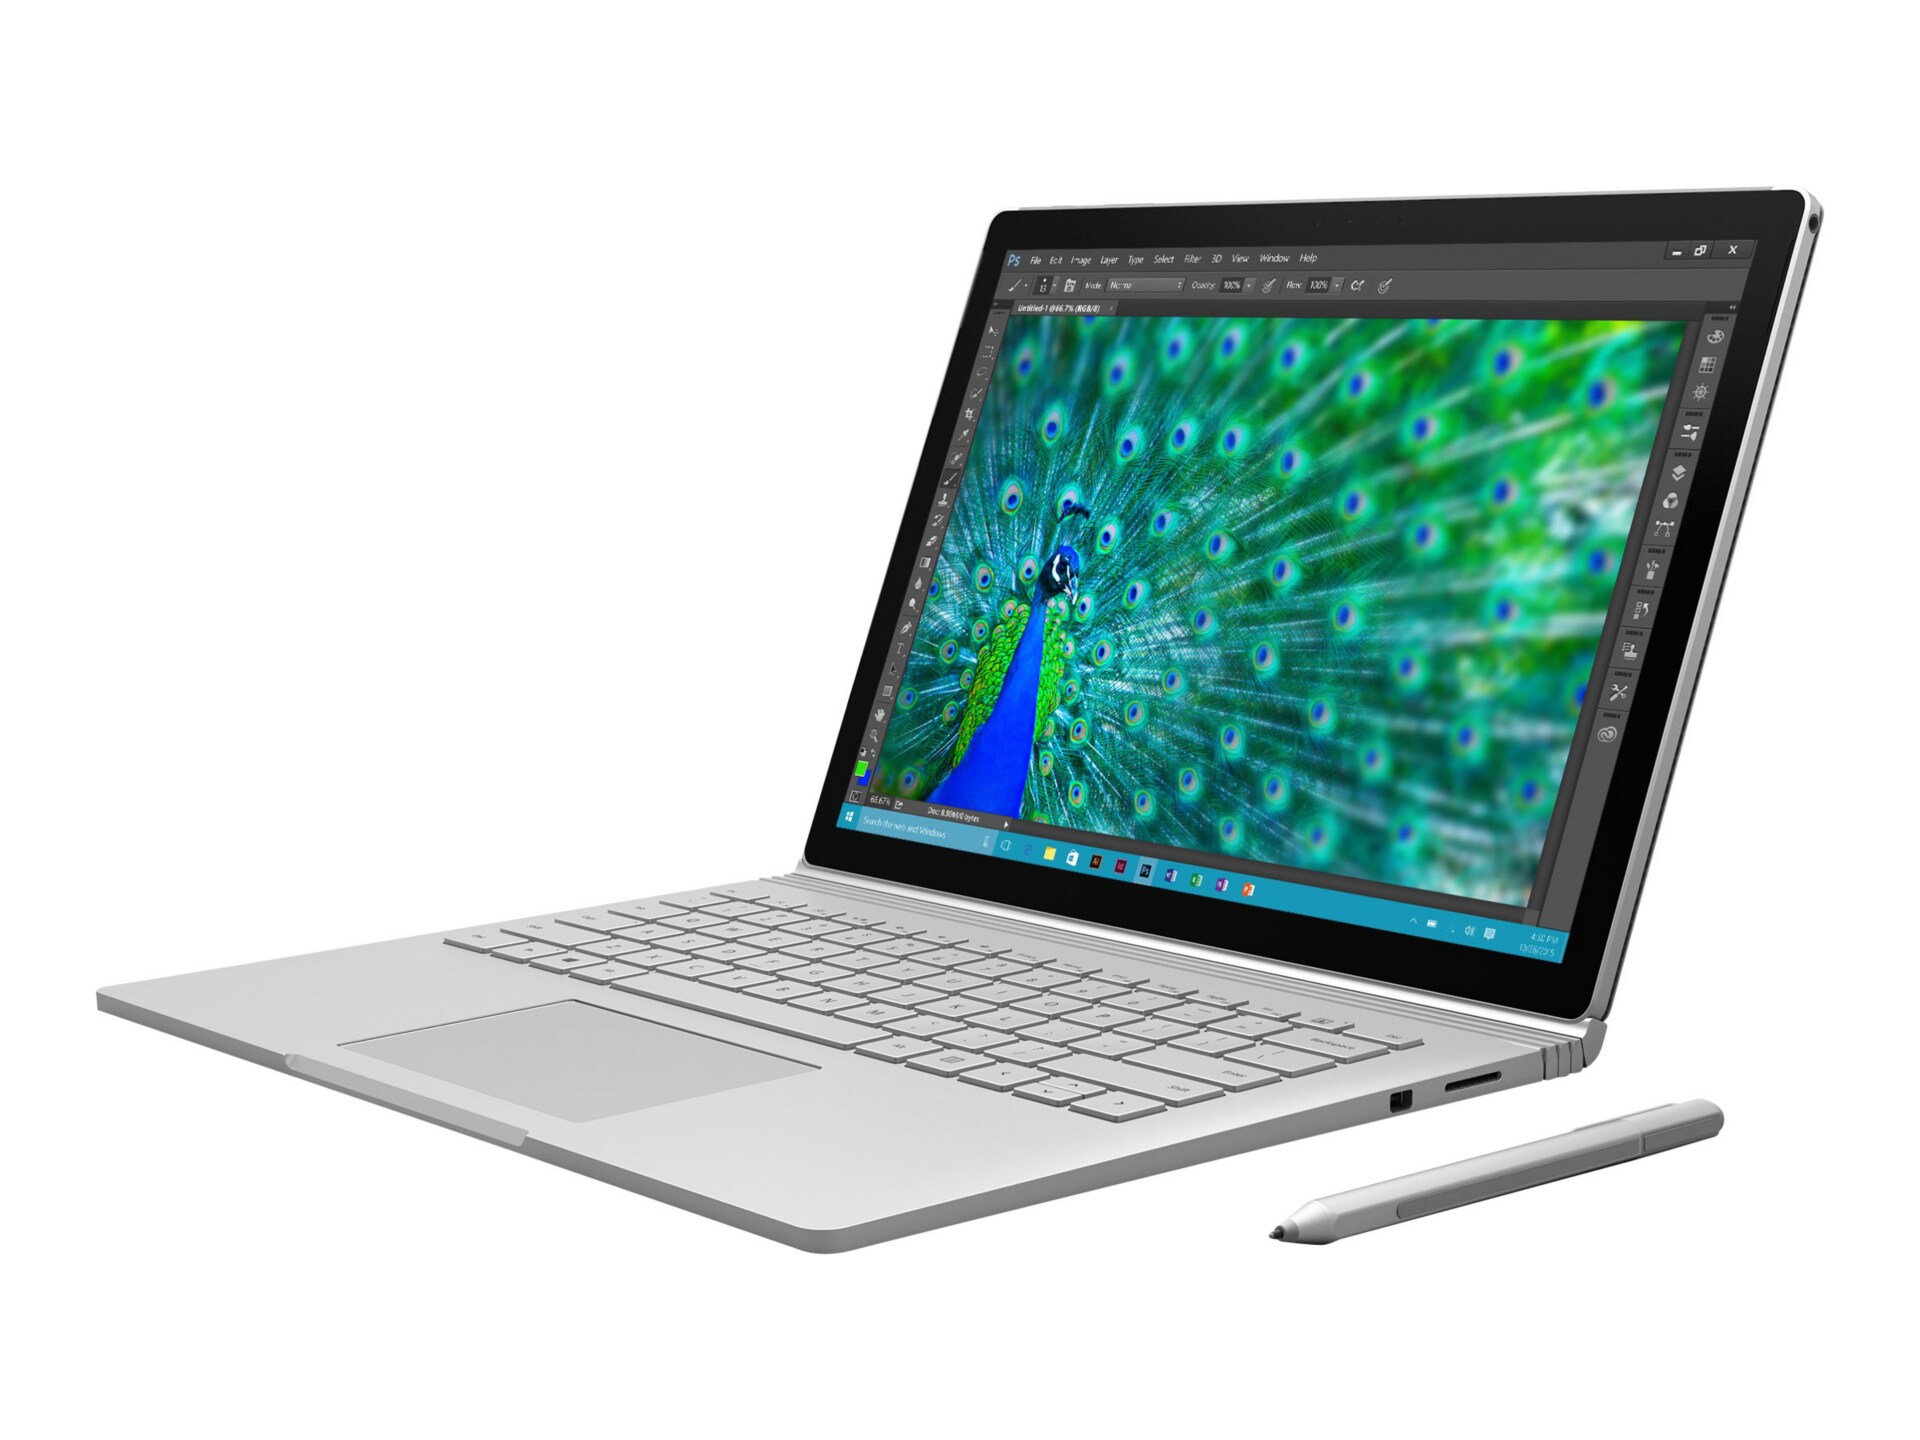 Microsoft Surface Book Win 10 Pro i5-6300U 8GB 128GB 13.5in. Recertified